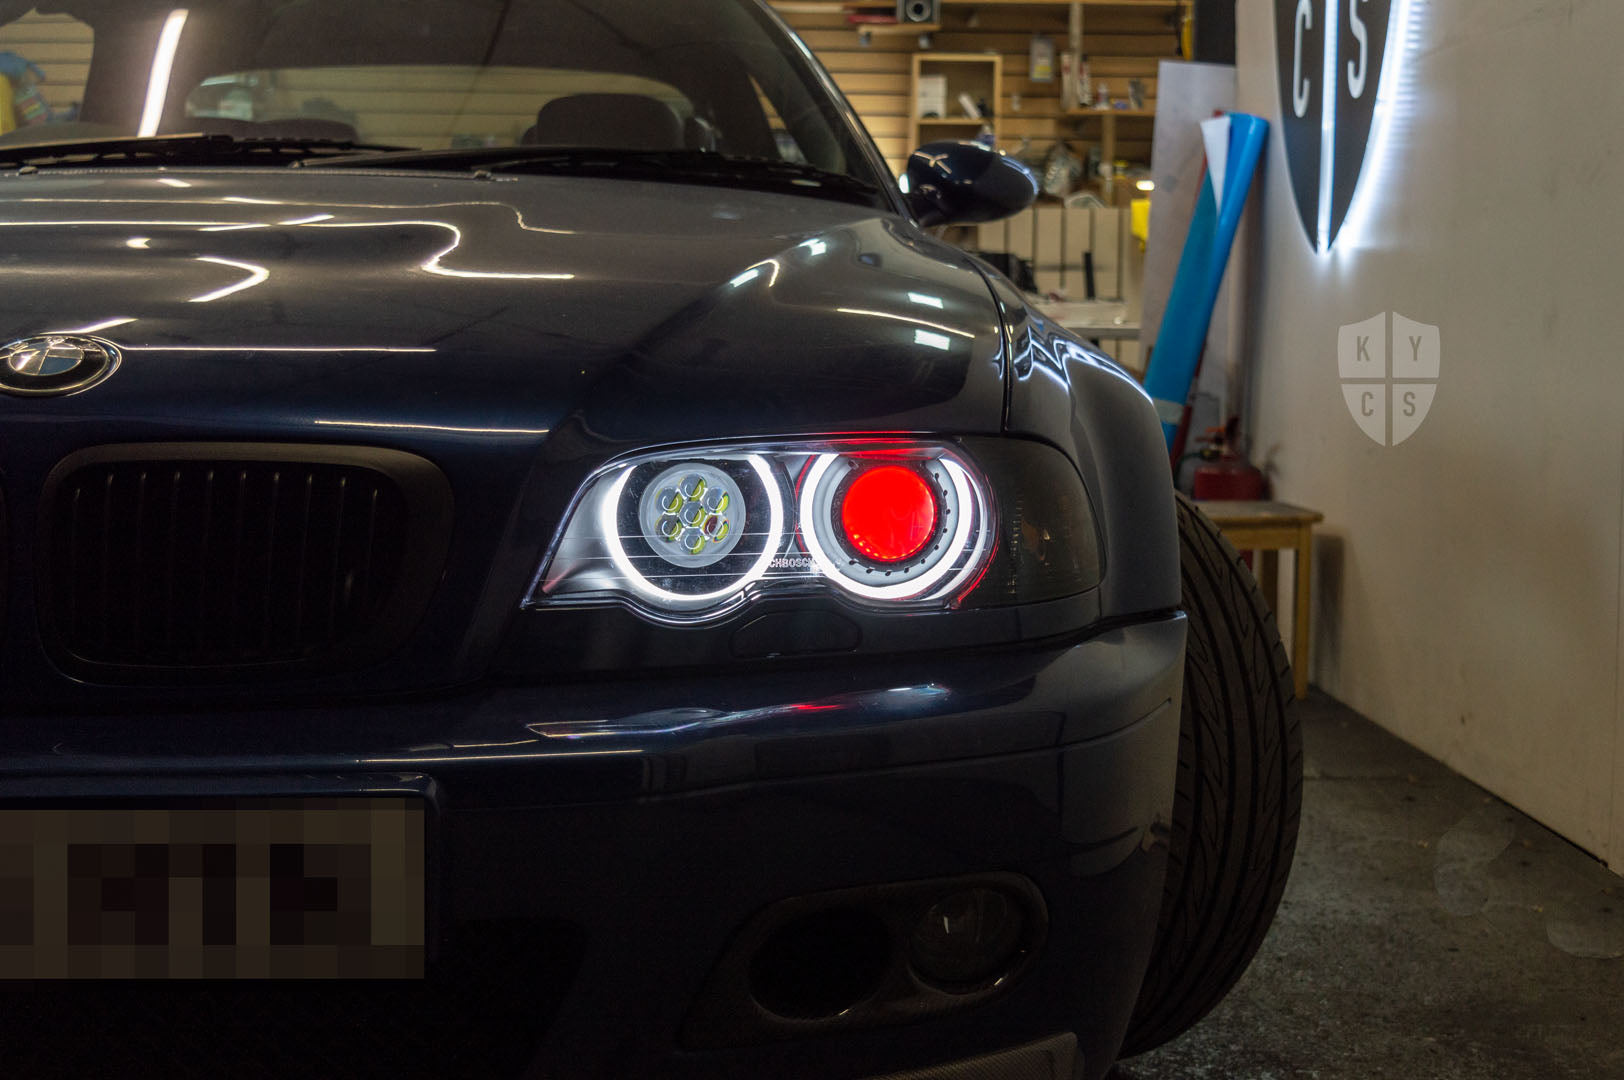 Angel Eyes LED Headlights - BMW E46 3 Series